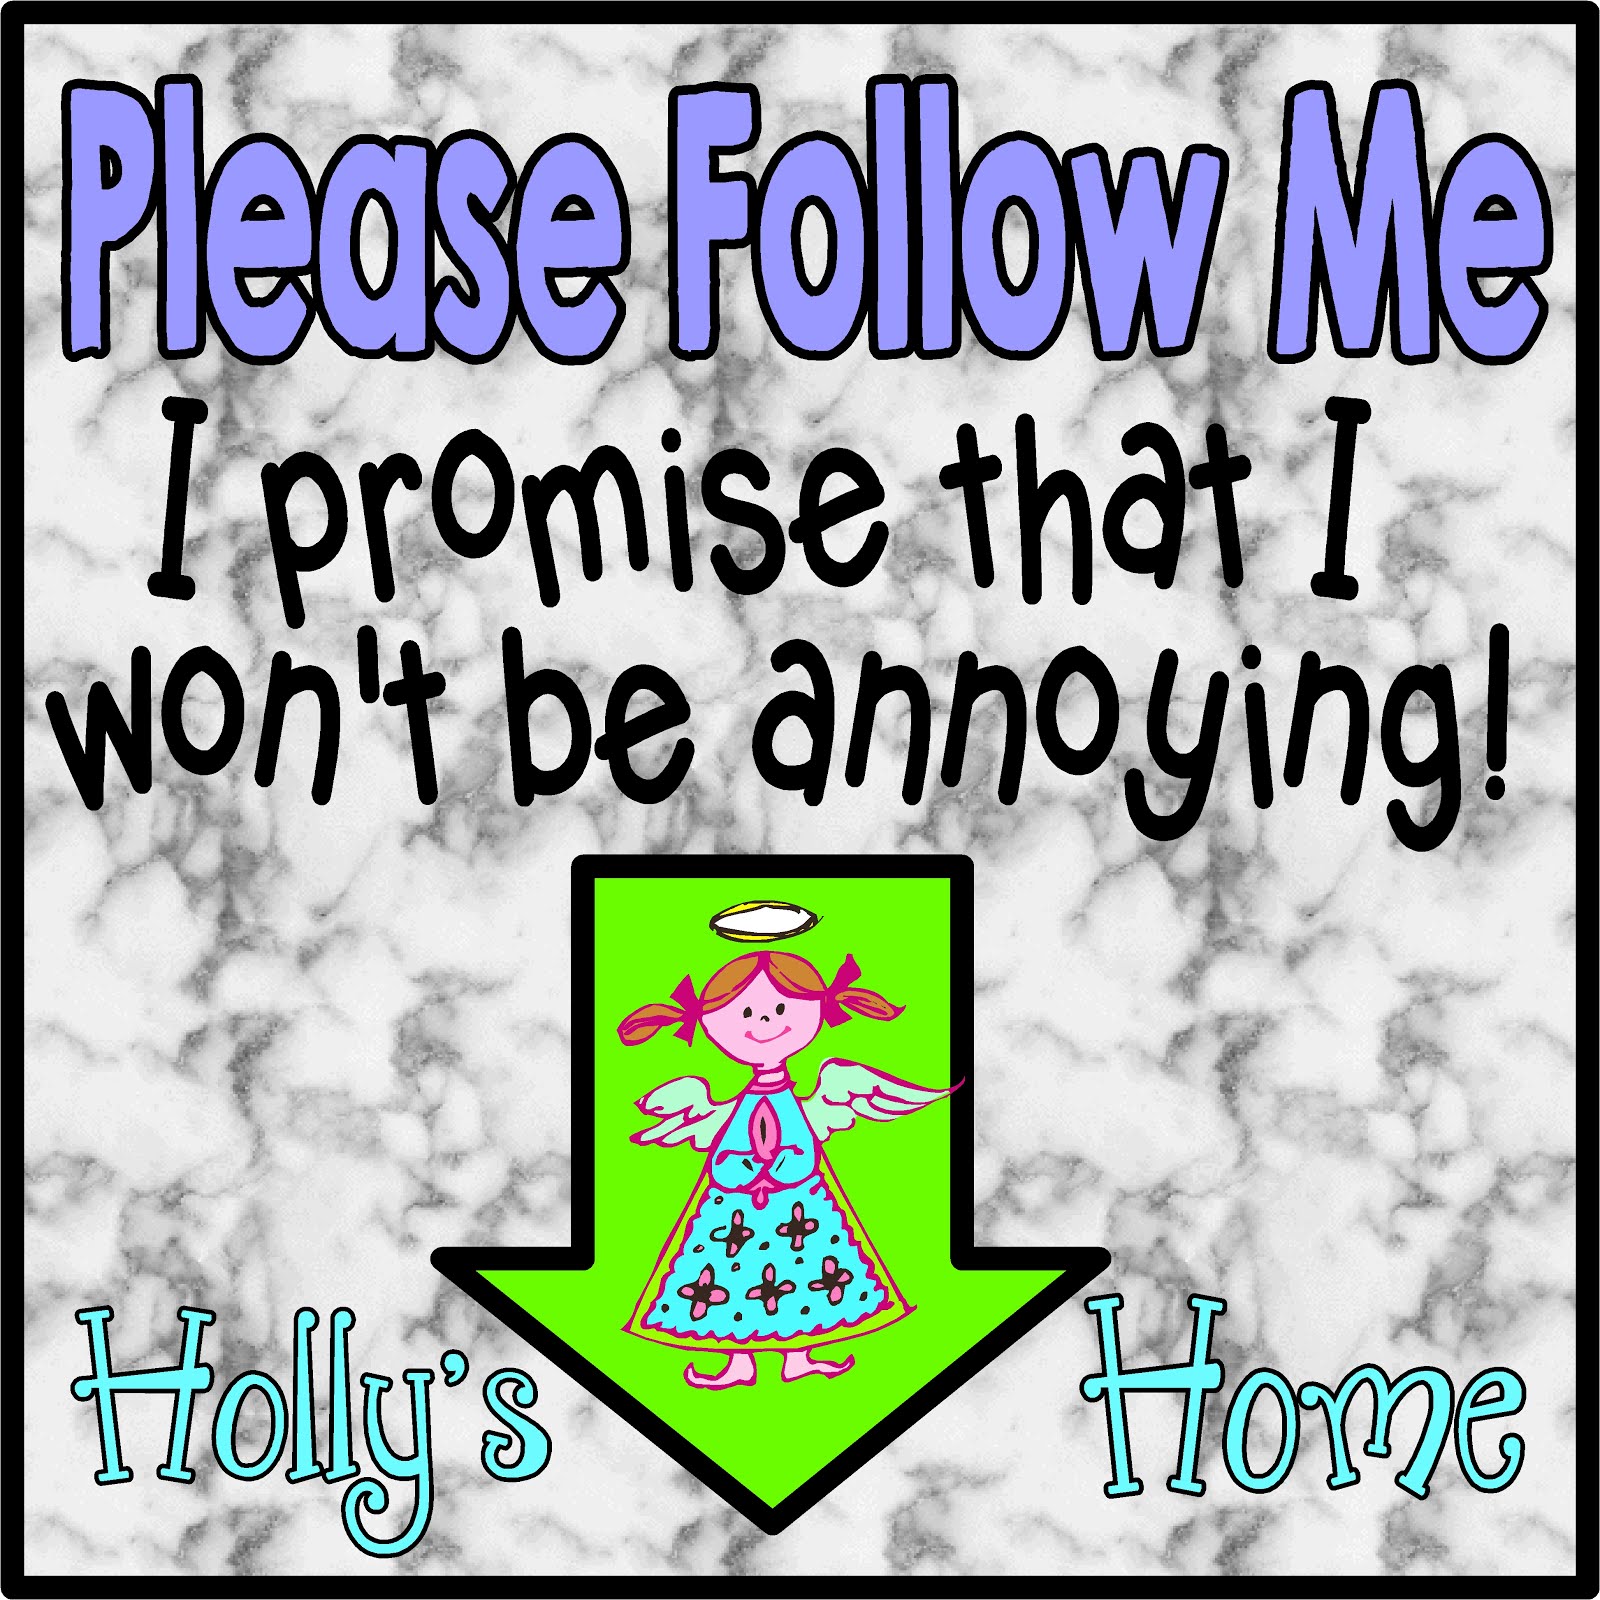 Please Follow Me.  I'm not annoying!